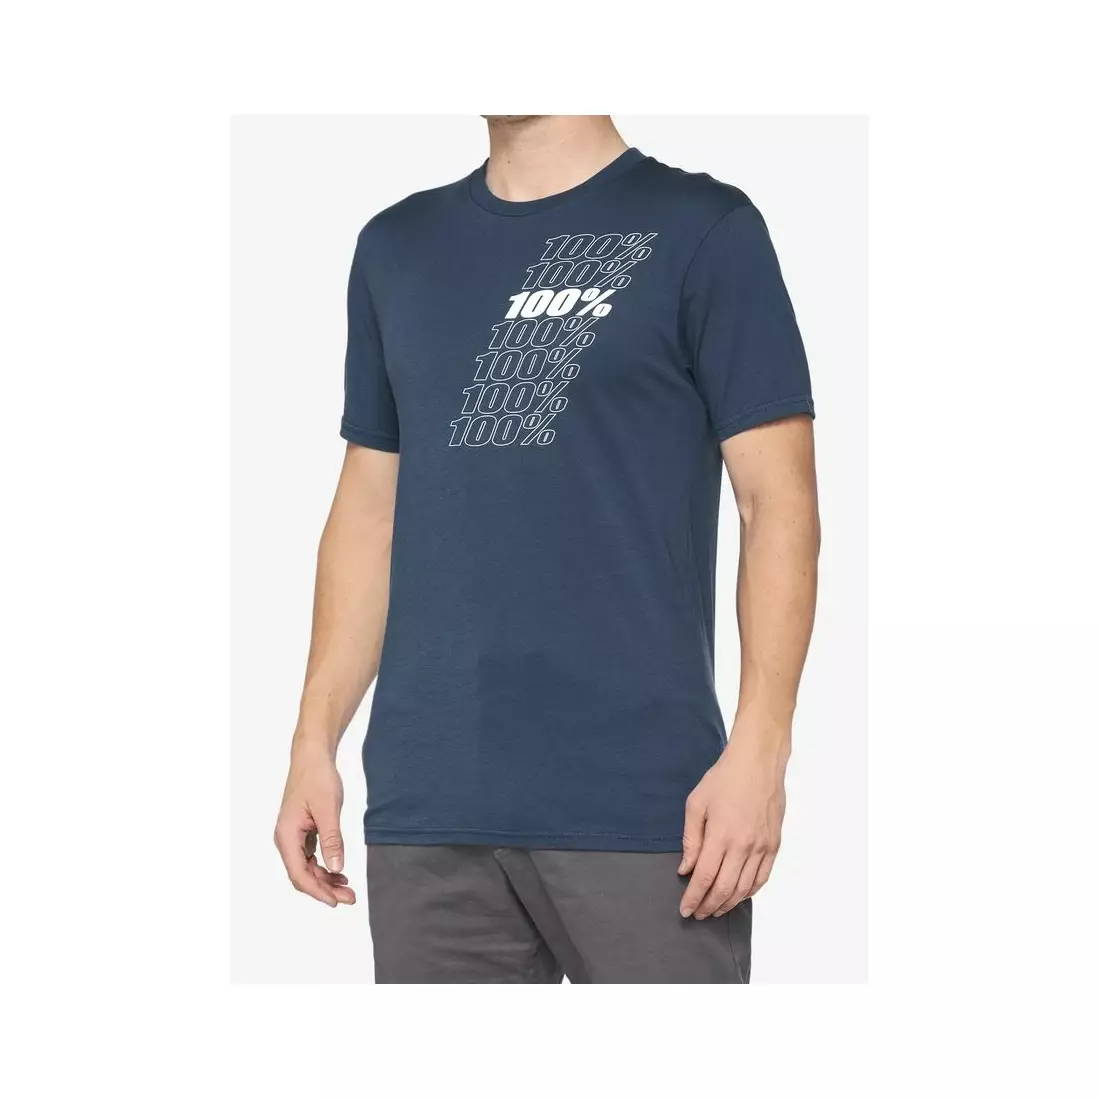 100% Herren Sport T-Shirt mit kurzen Ärmeln NORD slate blue STO-32124-182-13